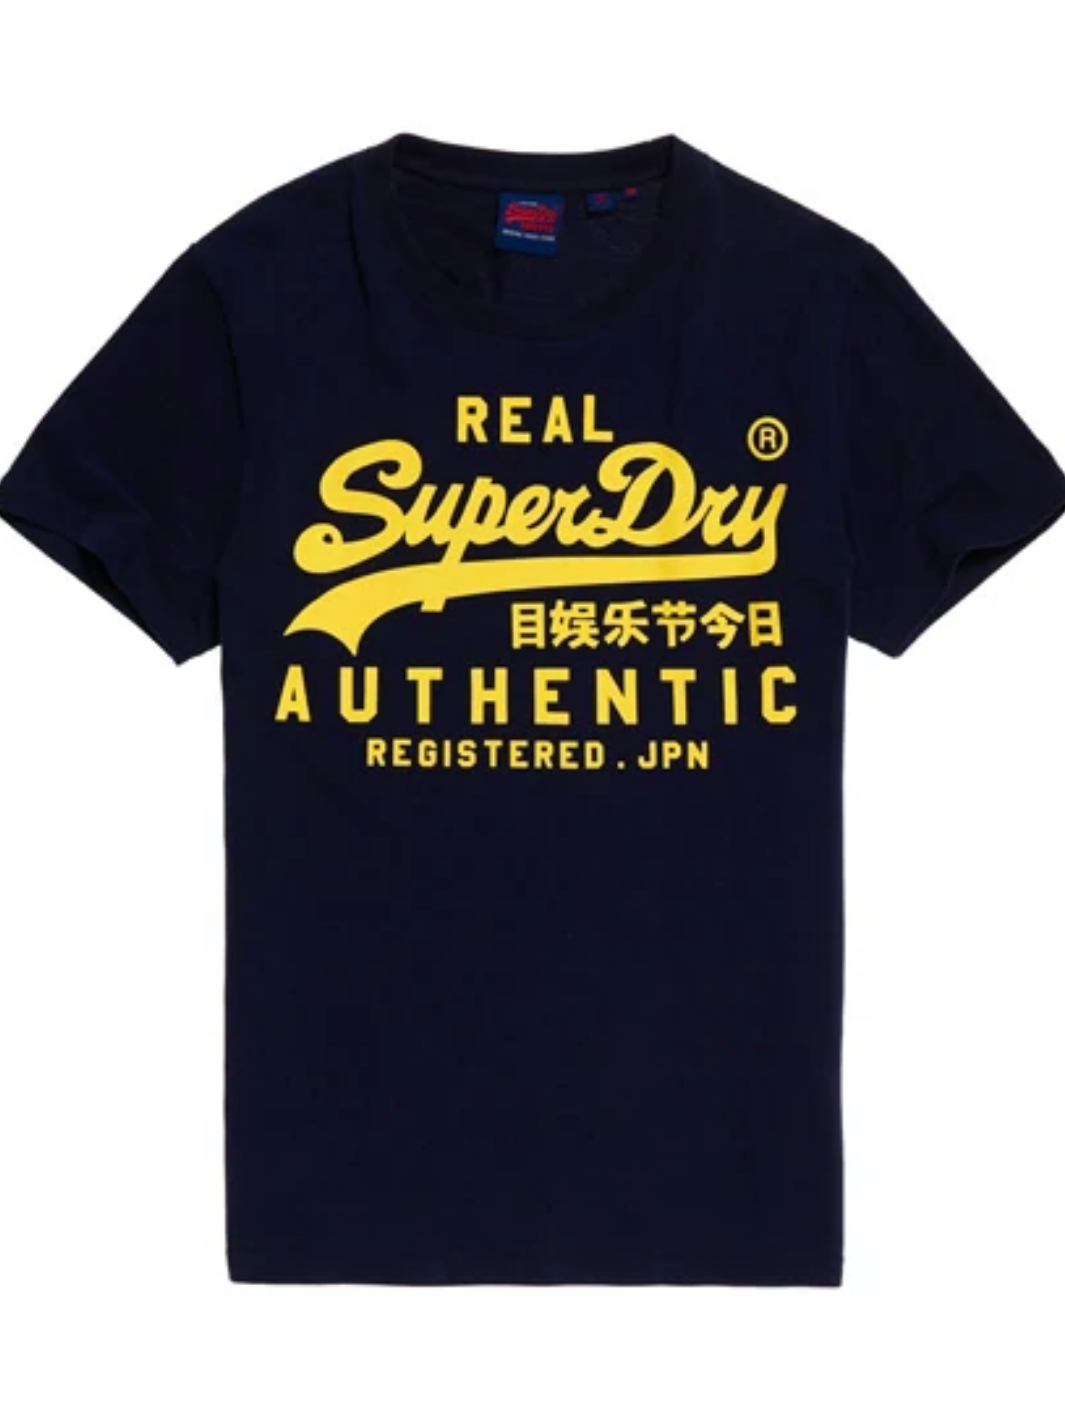 Mørkeblå Superdry T-shirt med gult logo